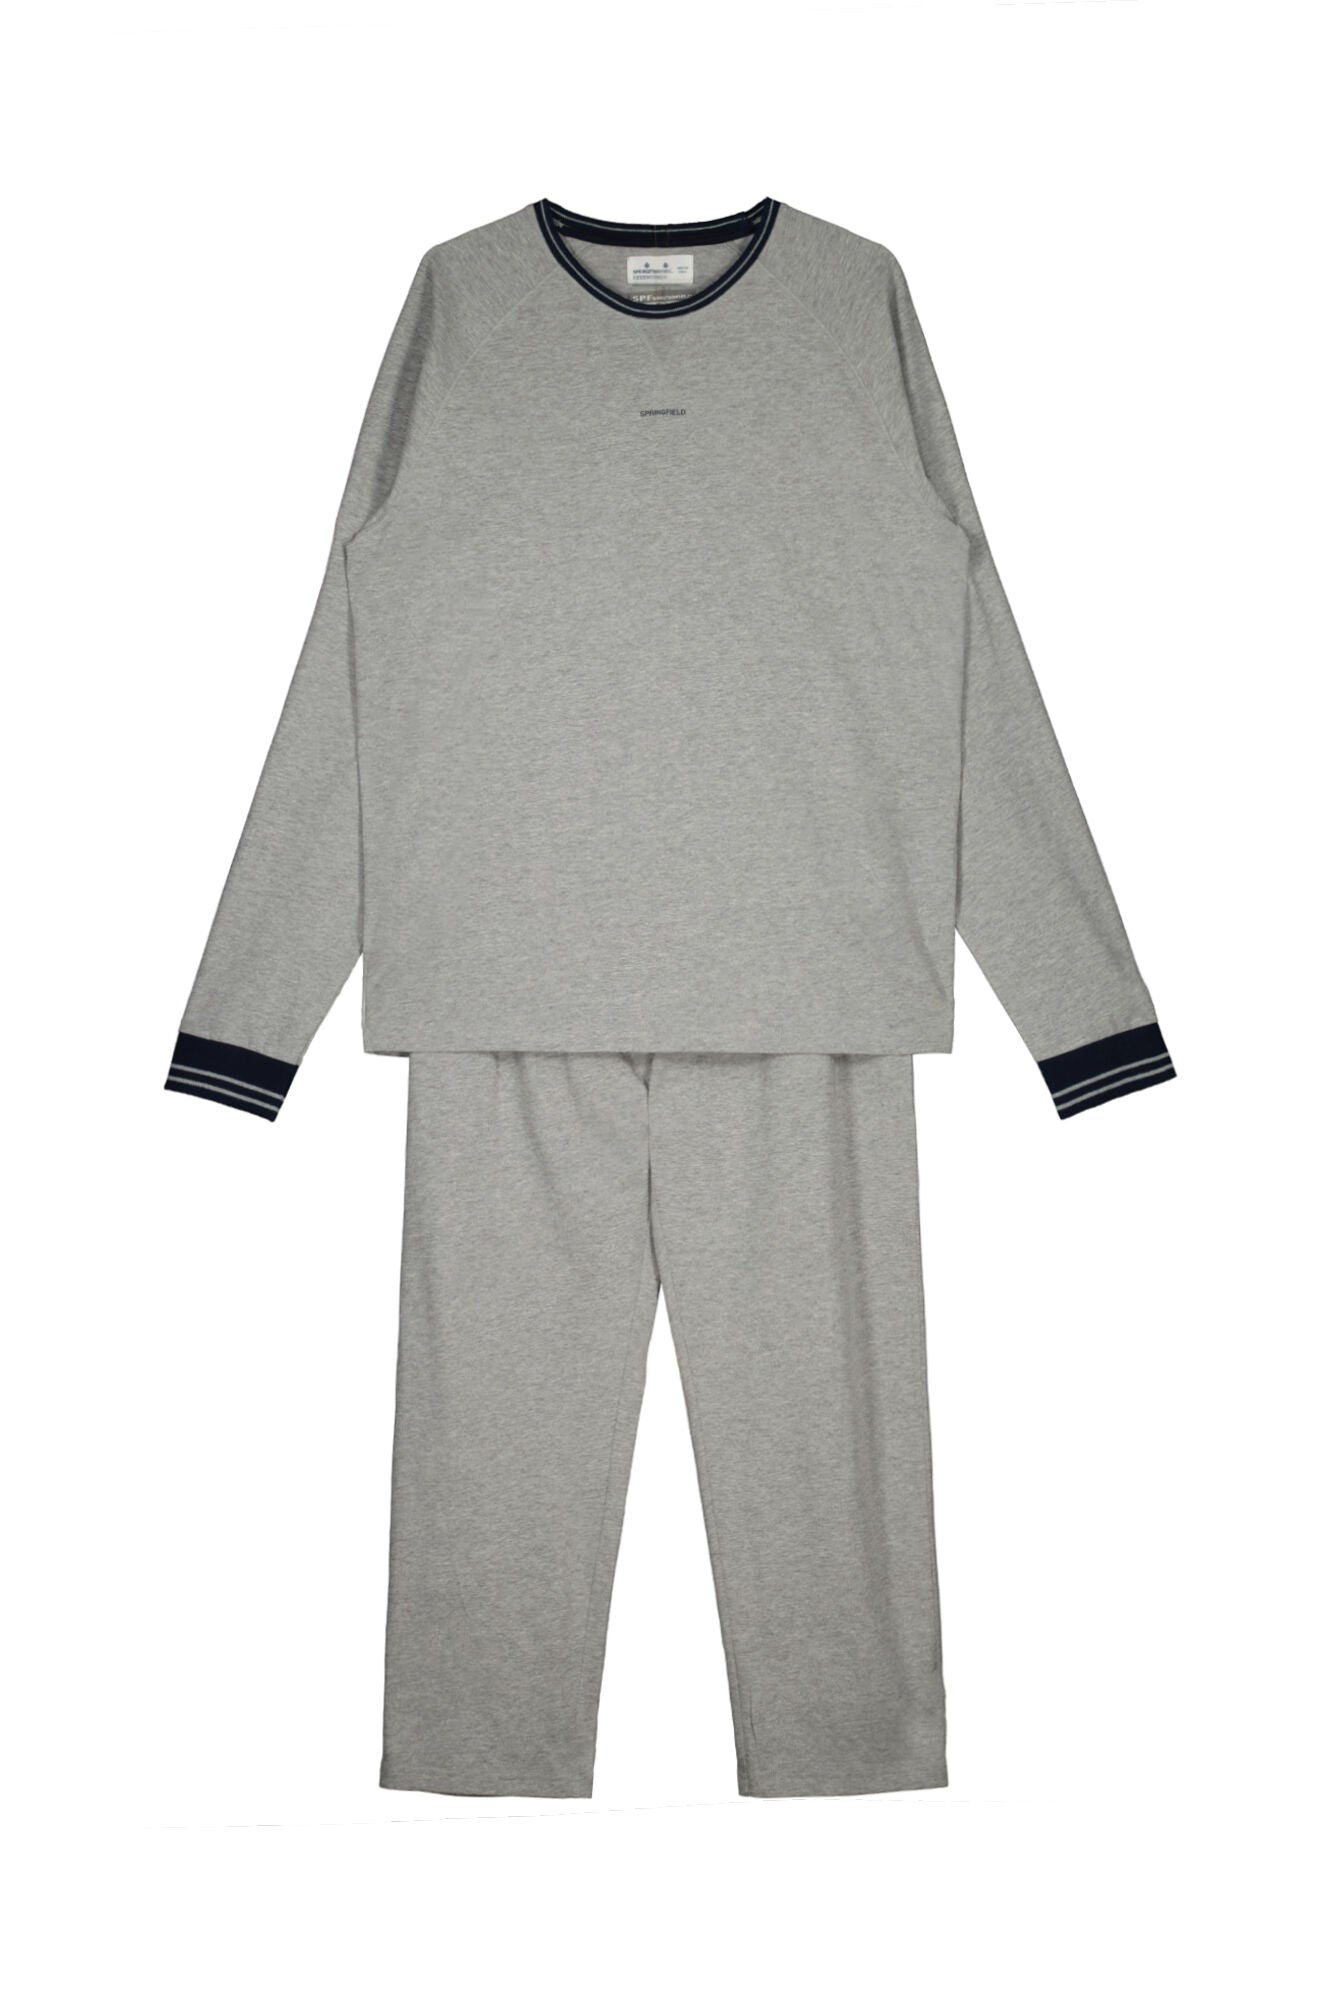 Single colour grey marl cotton jersey-knit long pyjamas